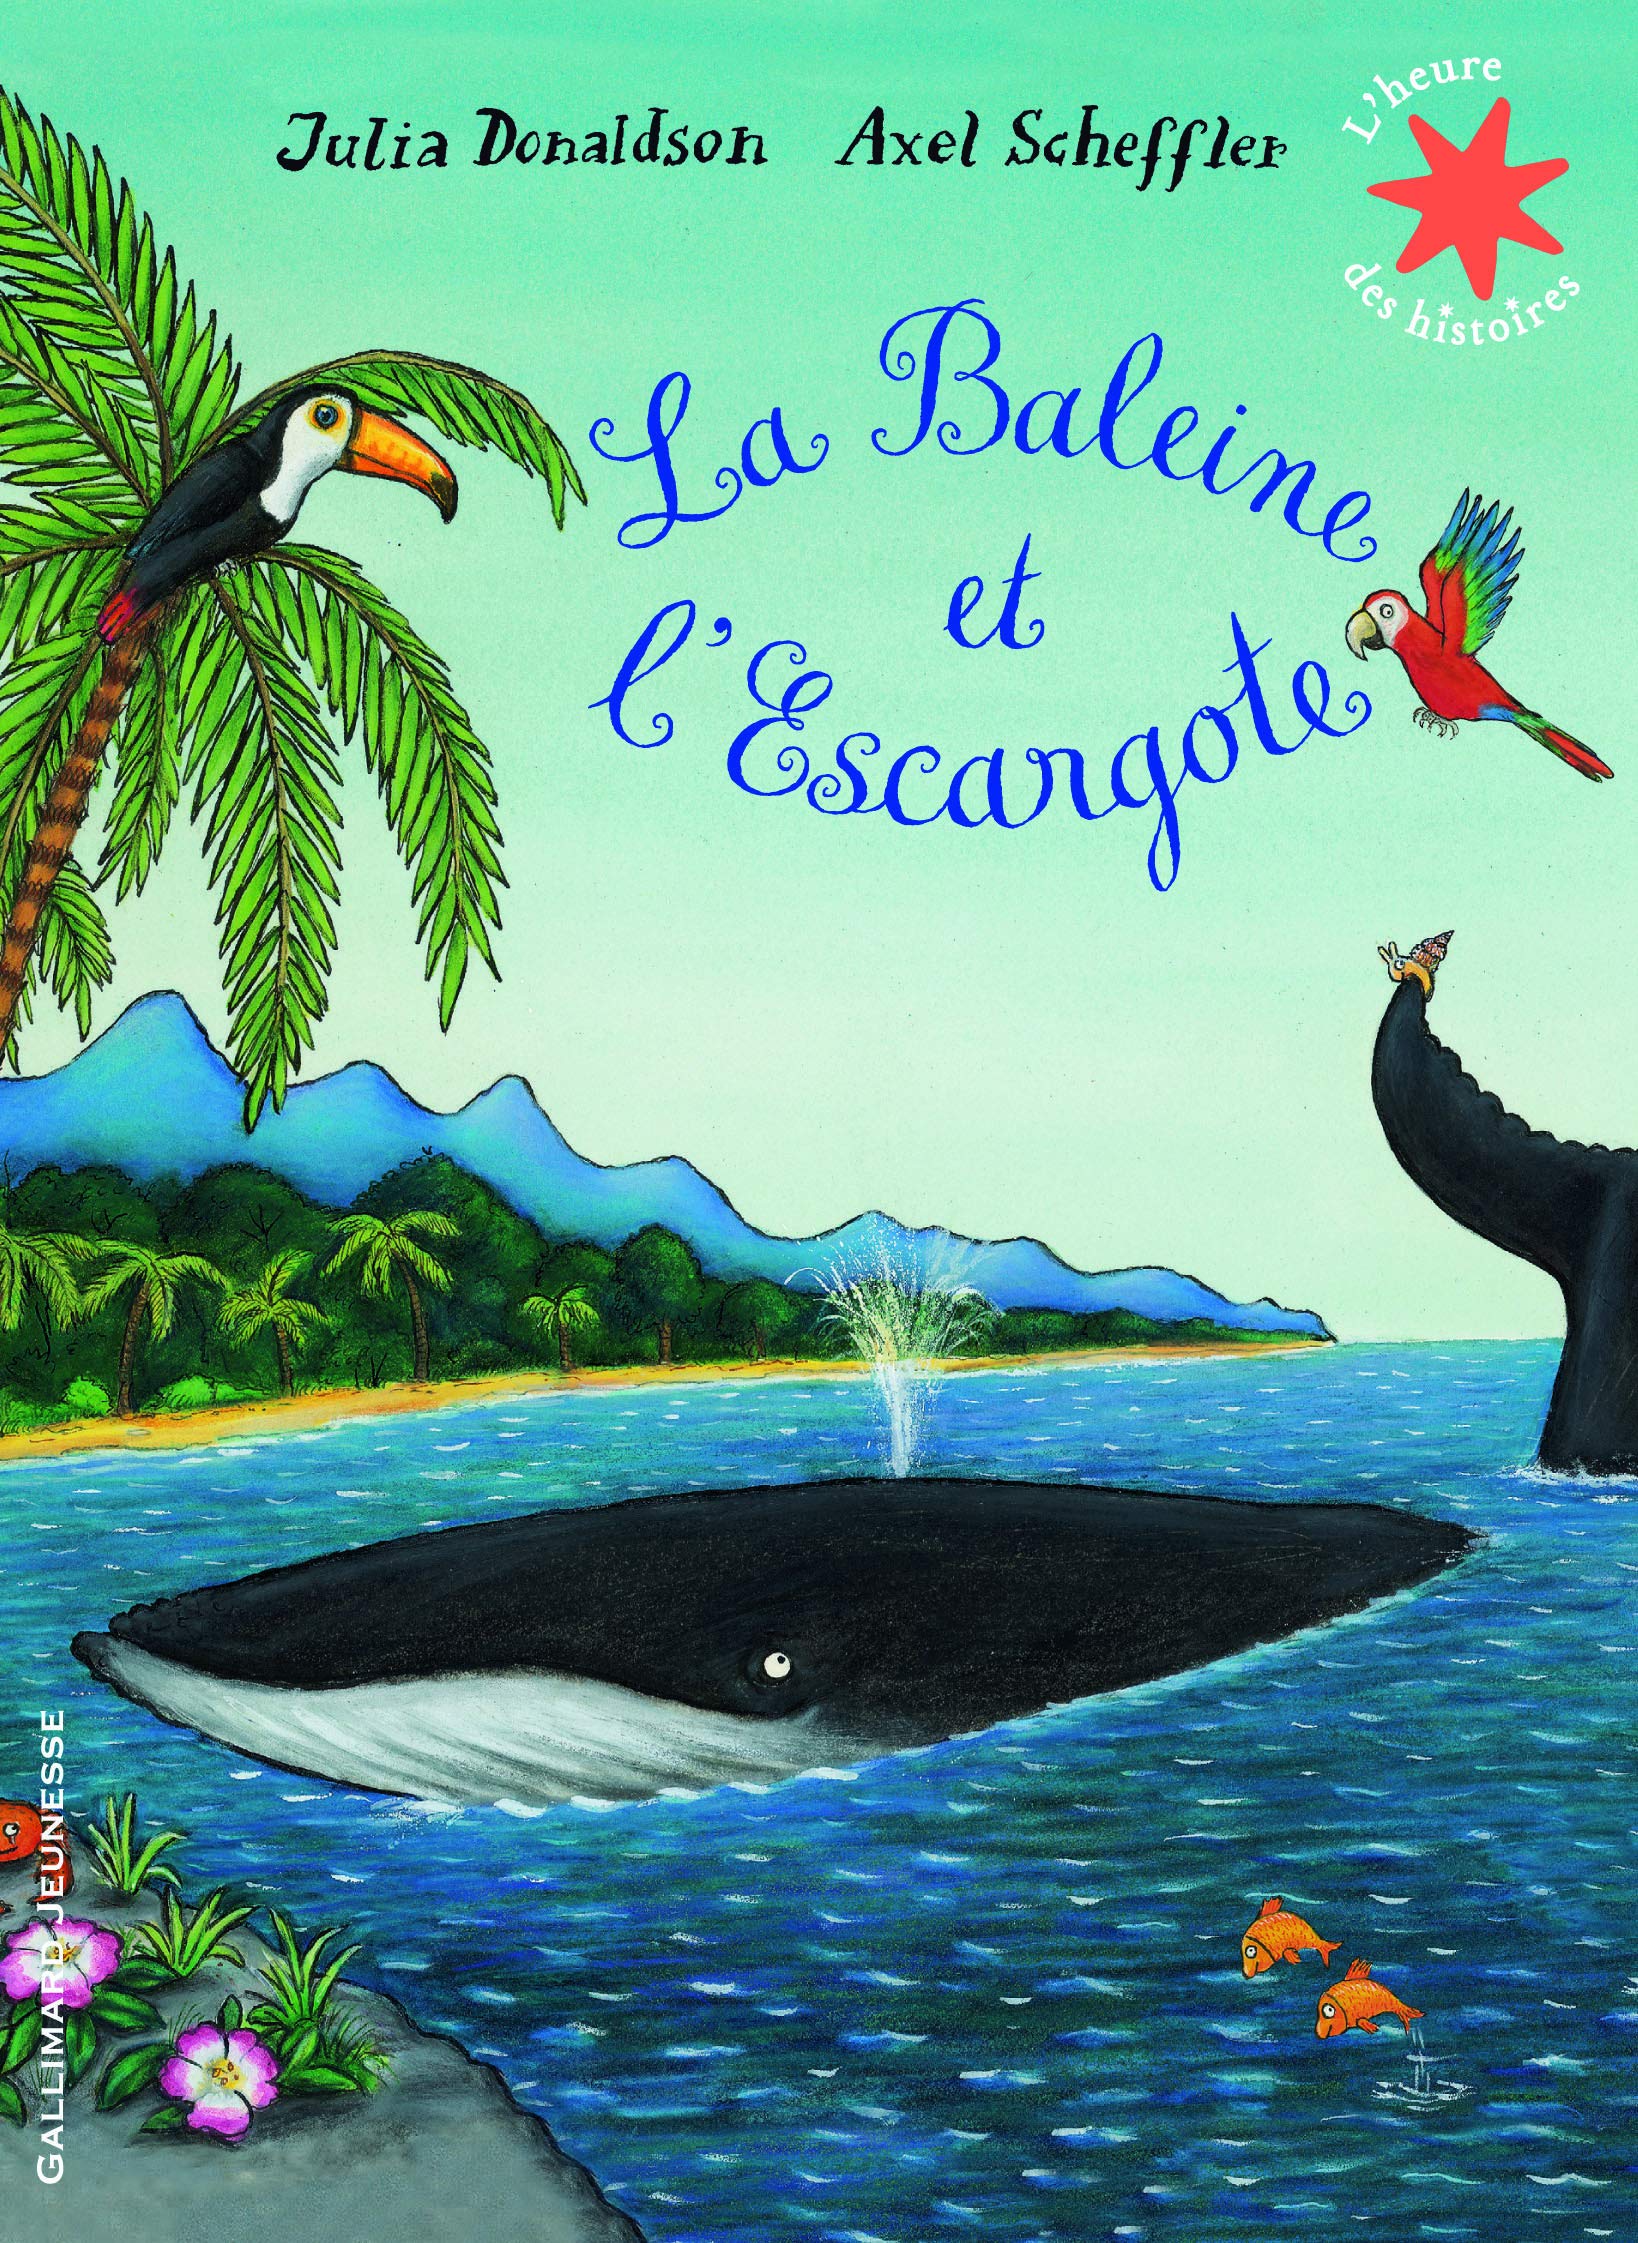 La Baleine et l\'Escargote | Julia Donaldson, Axel Scheffler